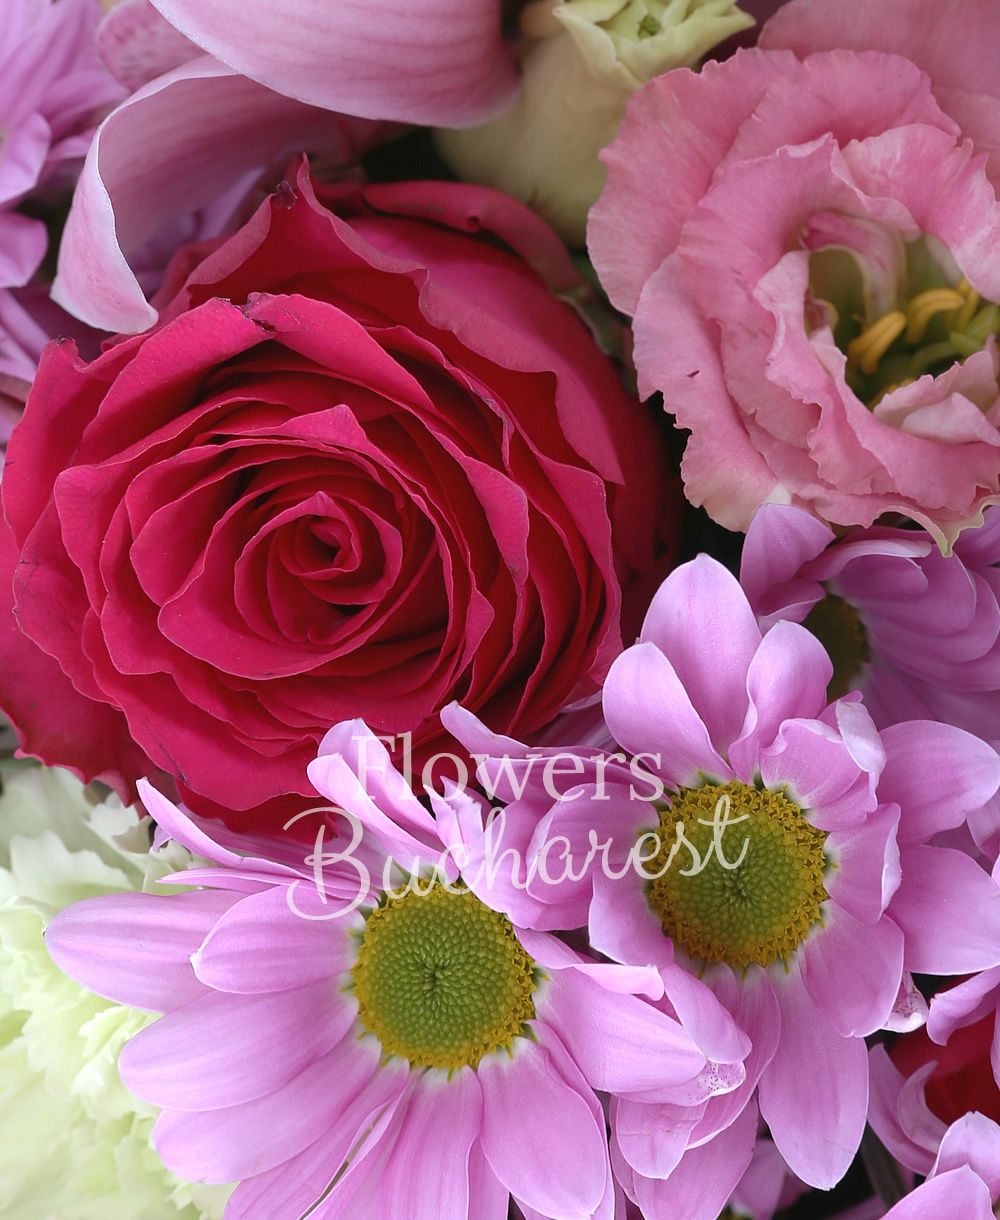 7 cyclam roses, 5 pink chrysanthemums, 2 green anthurium, 7 pink lisianthus, 7 pink carnations, 5 cyclam miniroses, pink cymbidium, greenery